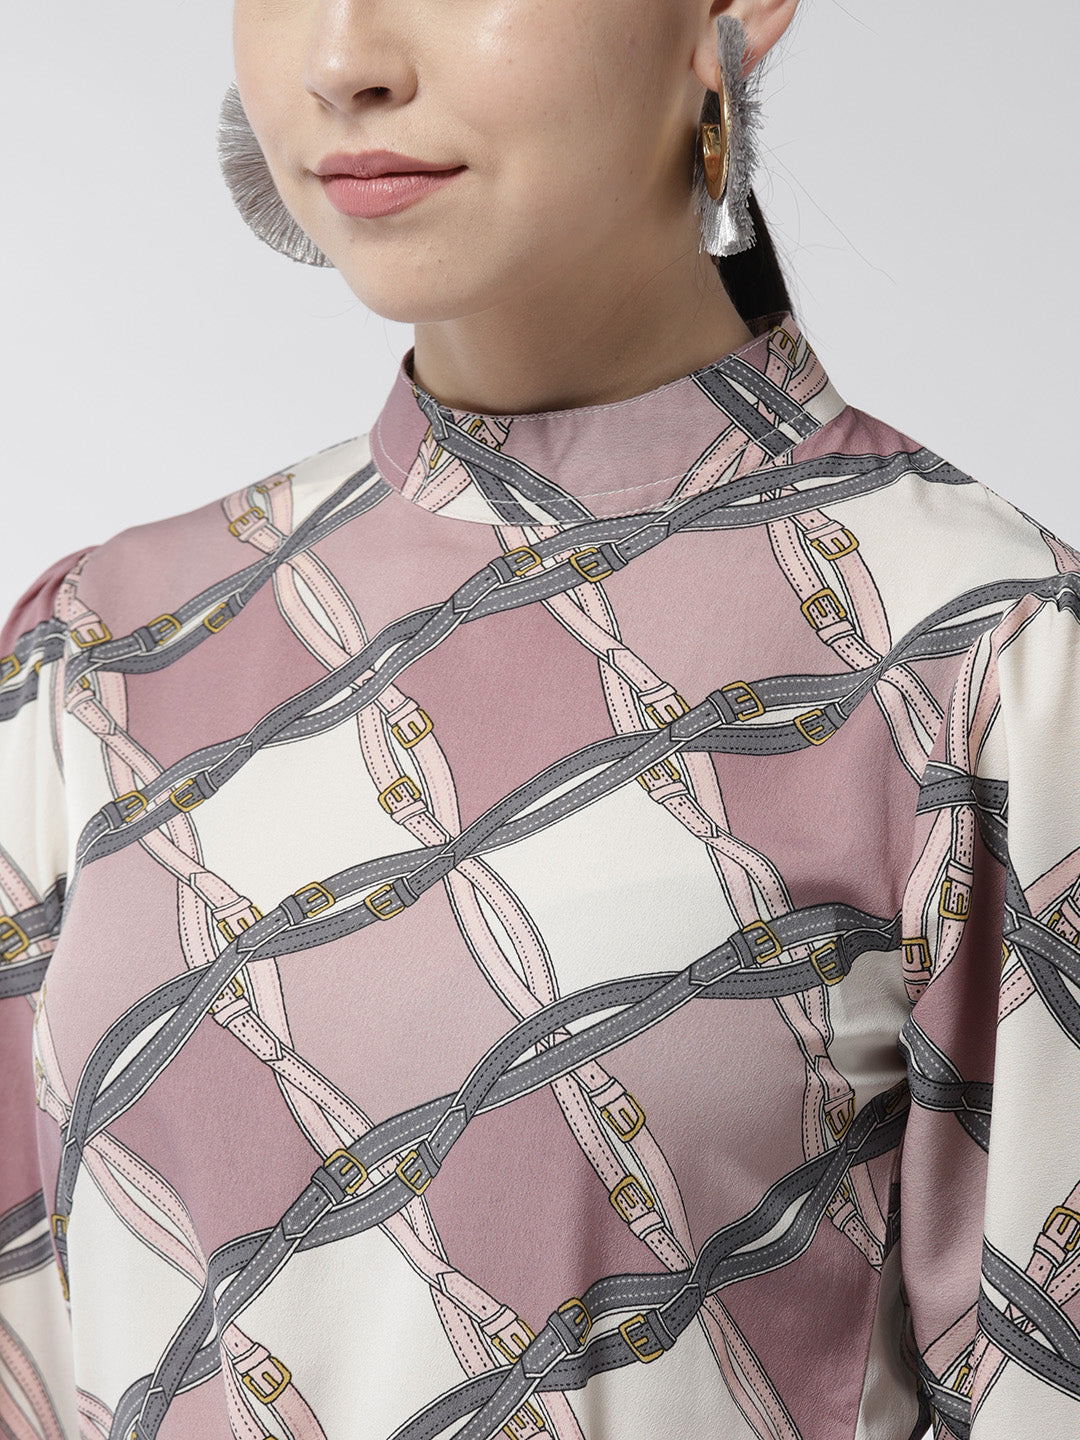 Women's Polyester Lavender Belt Print Manderin Collar Dress with belt - StyleStone